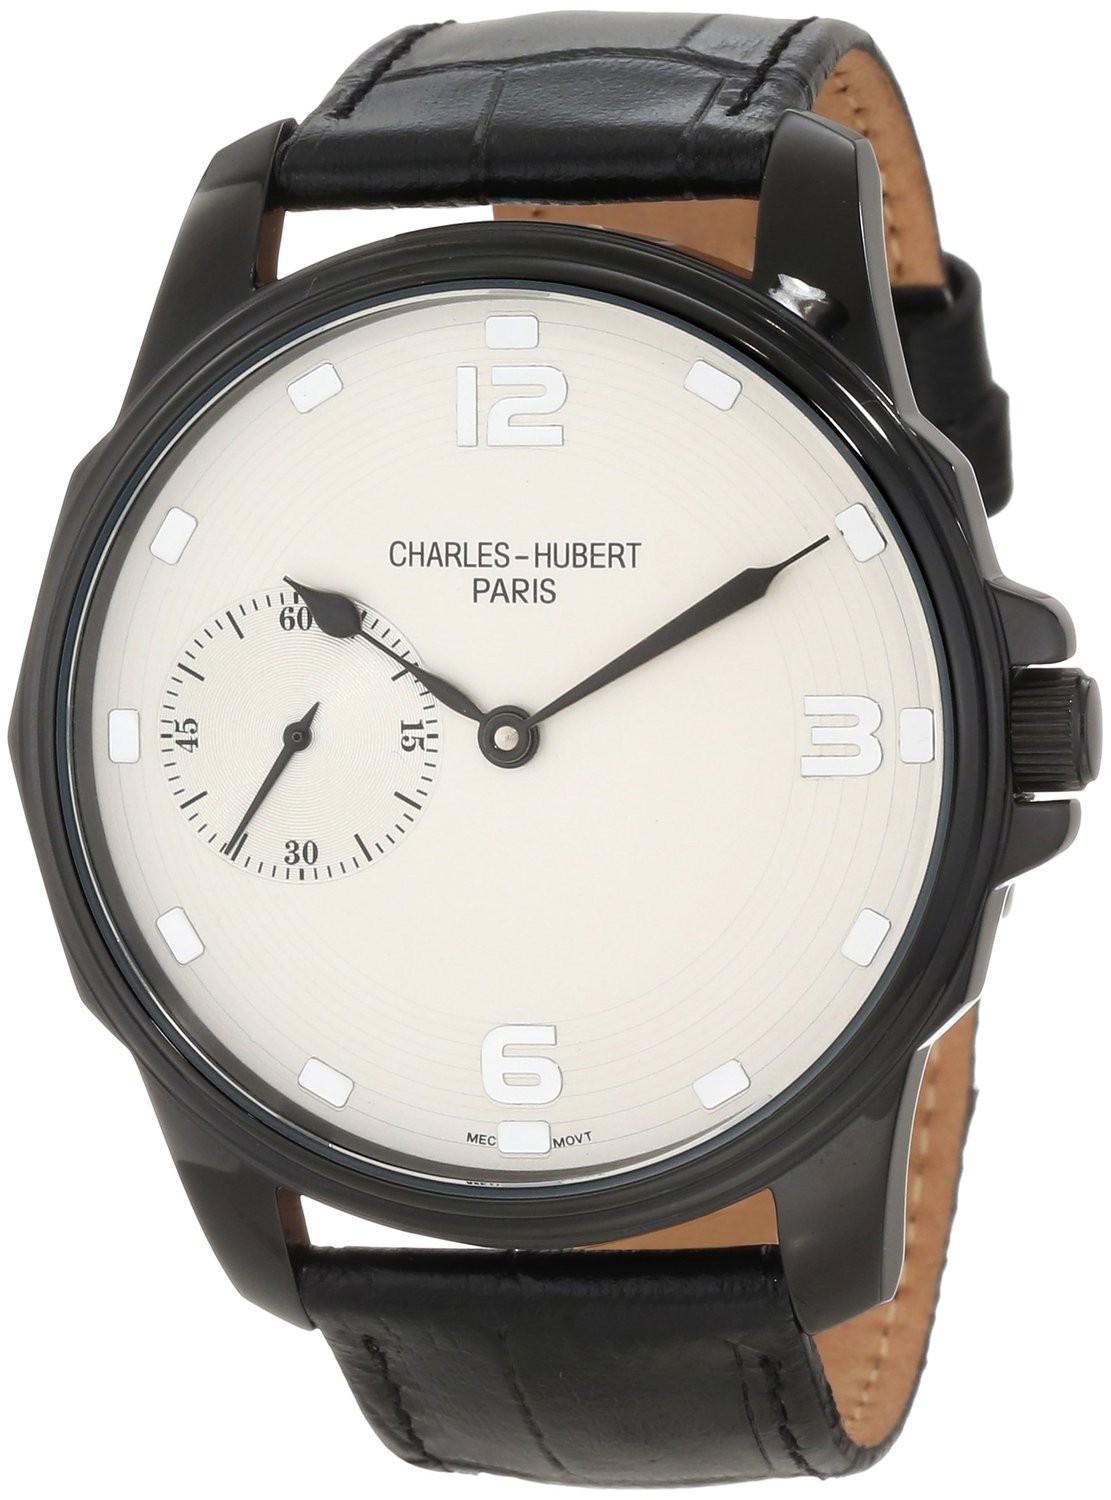 Charles-Hubert Paris Men's Black Plated Stainless Steel Mechanical Watch